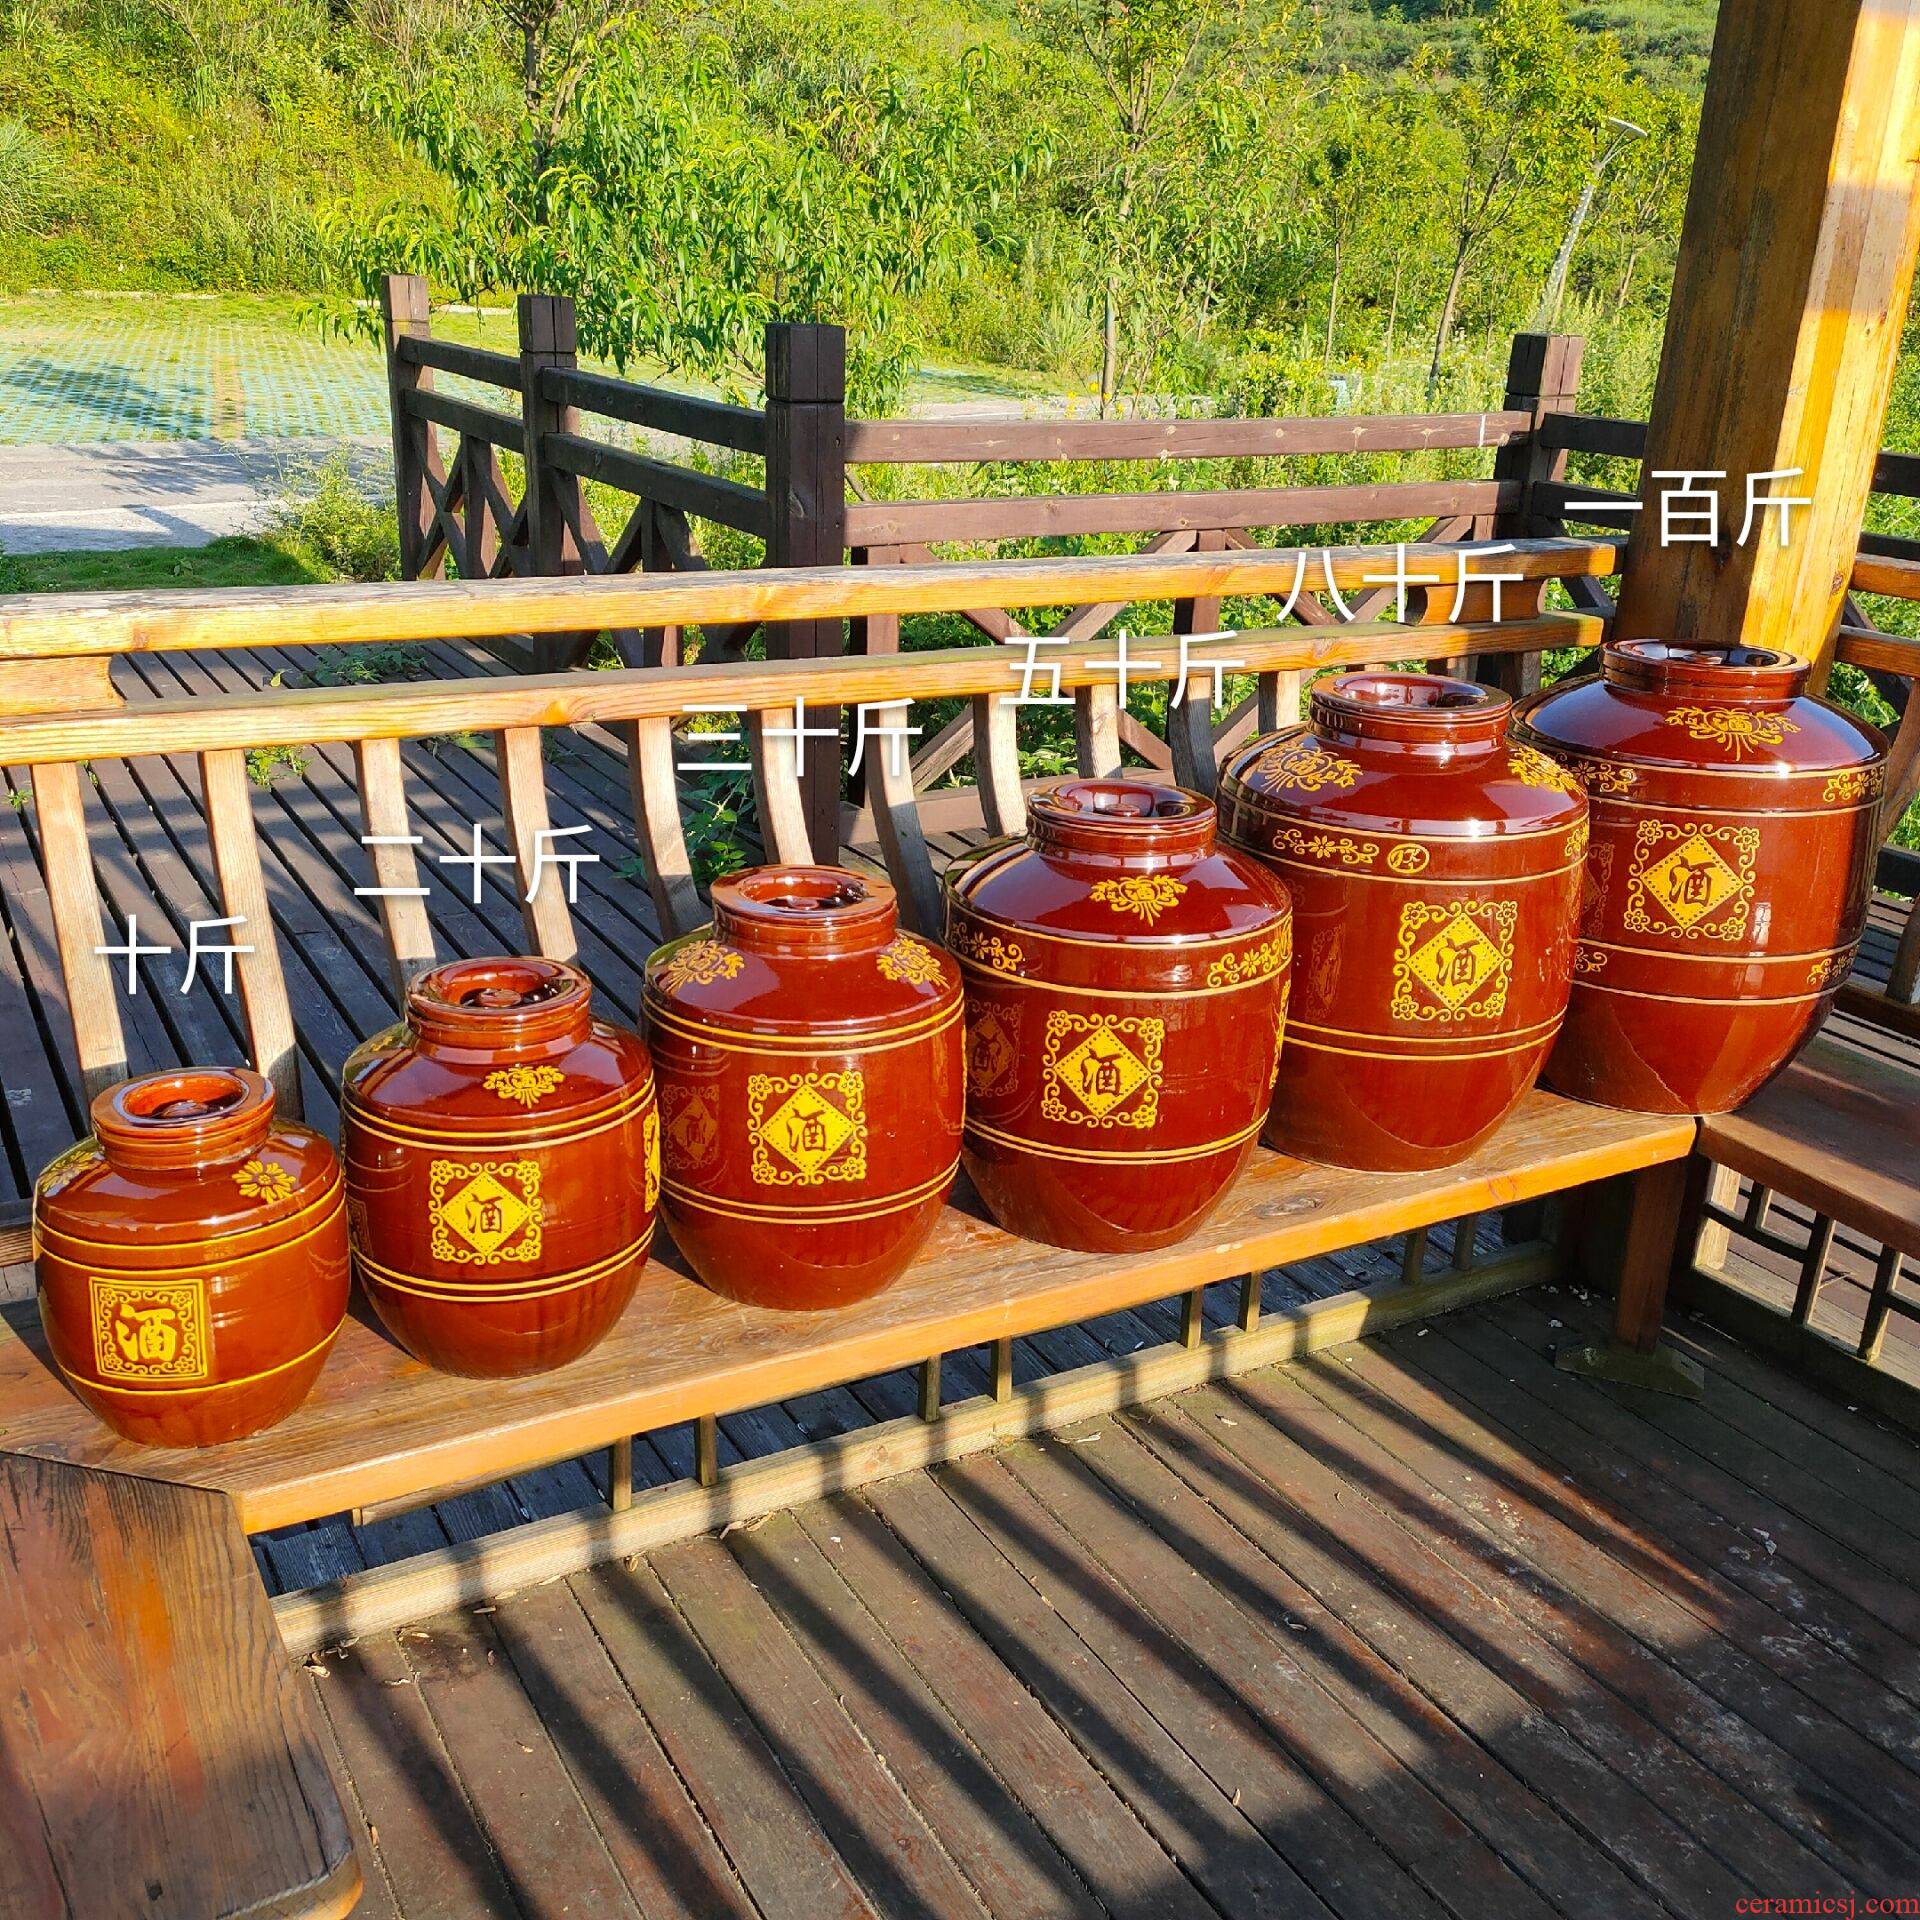 Ceramic jars it great earthenware jar sealing jugs with wine yeast of 10-100 tons of household hoard jars